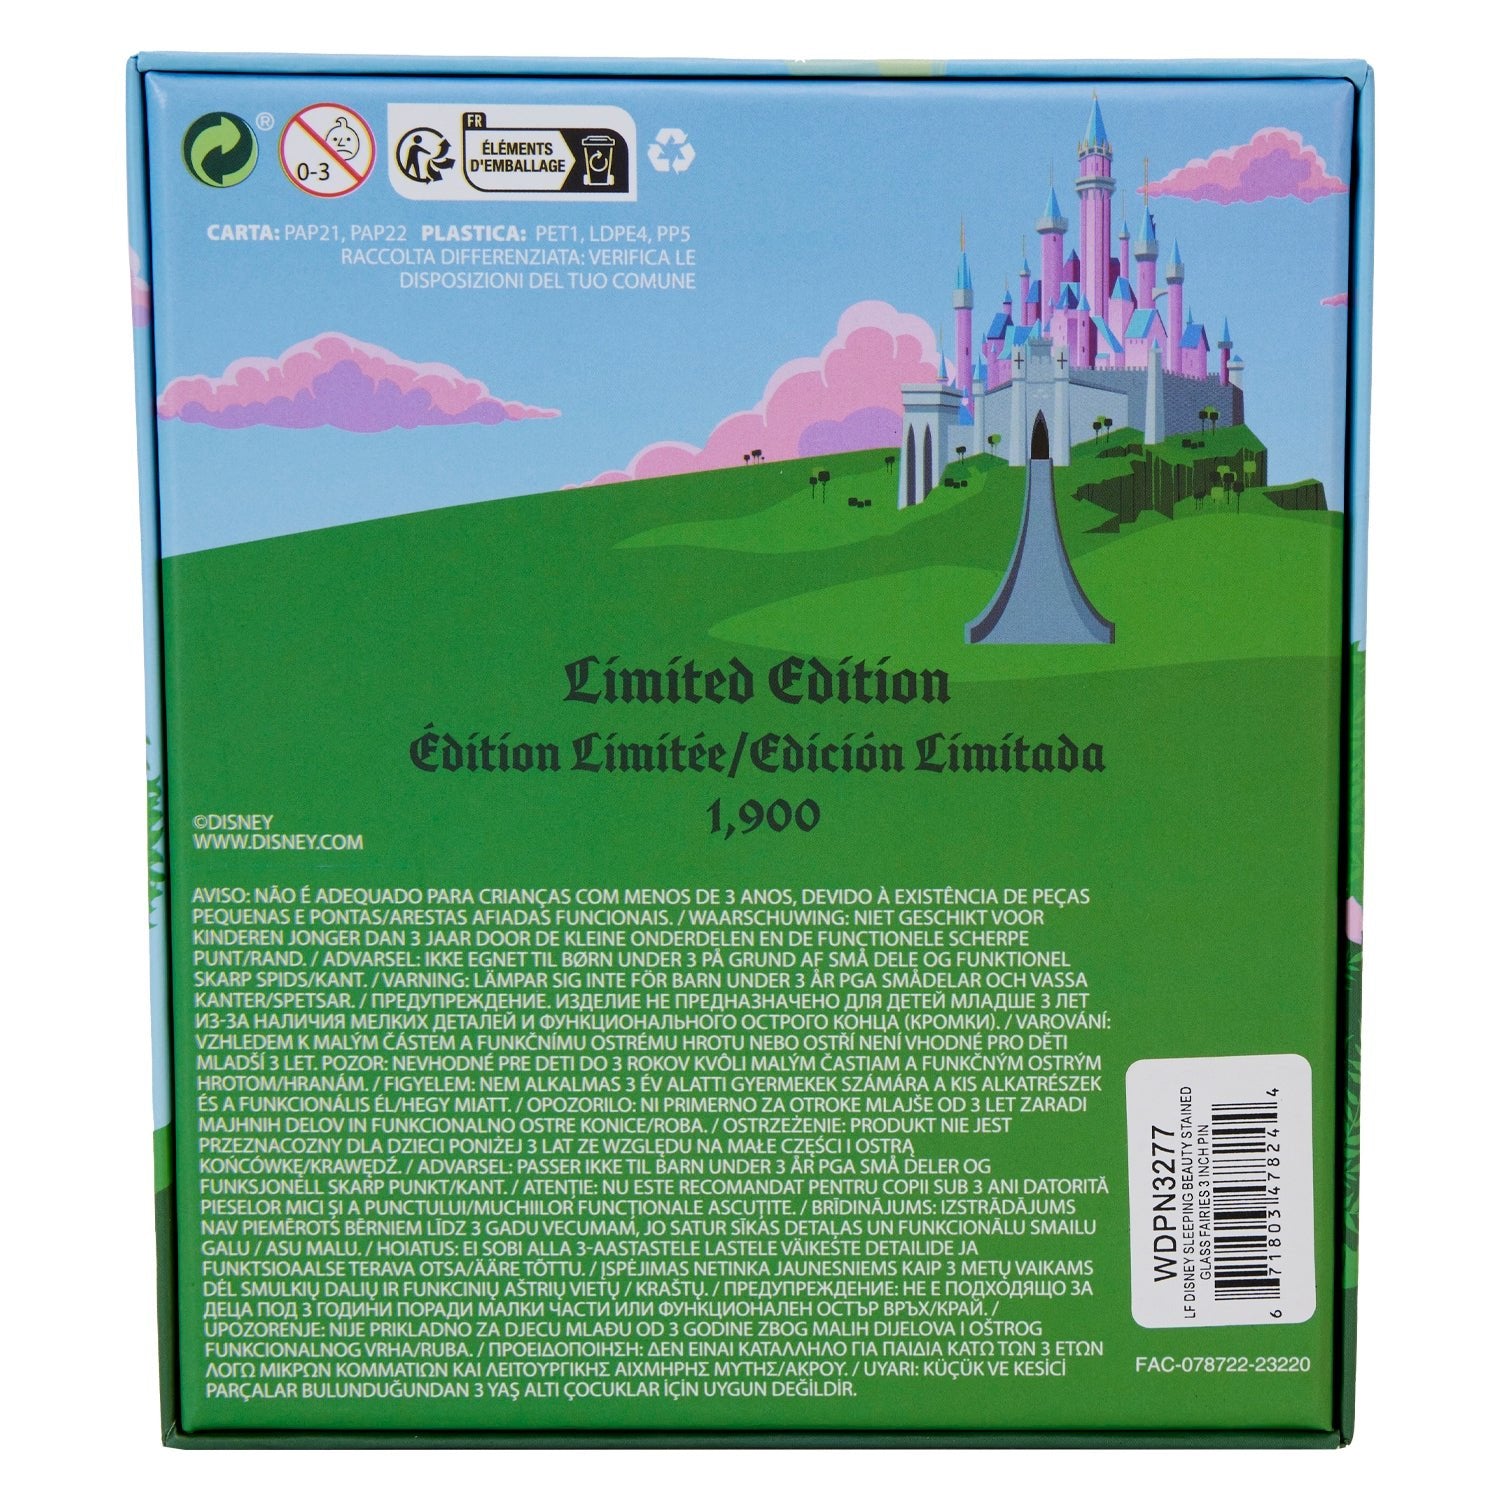 Loungefly x Disney Sleeping Beauty The Three Fairies 3 Inch Ltd Ed Pin - GeekCore